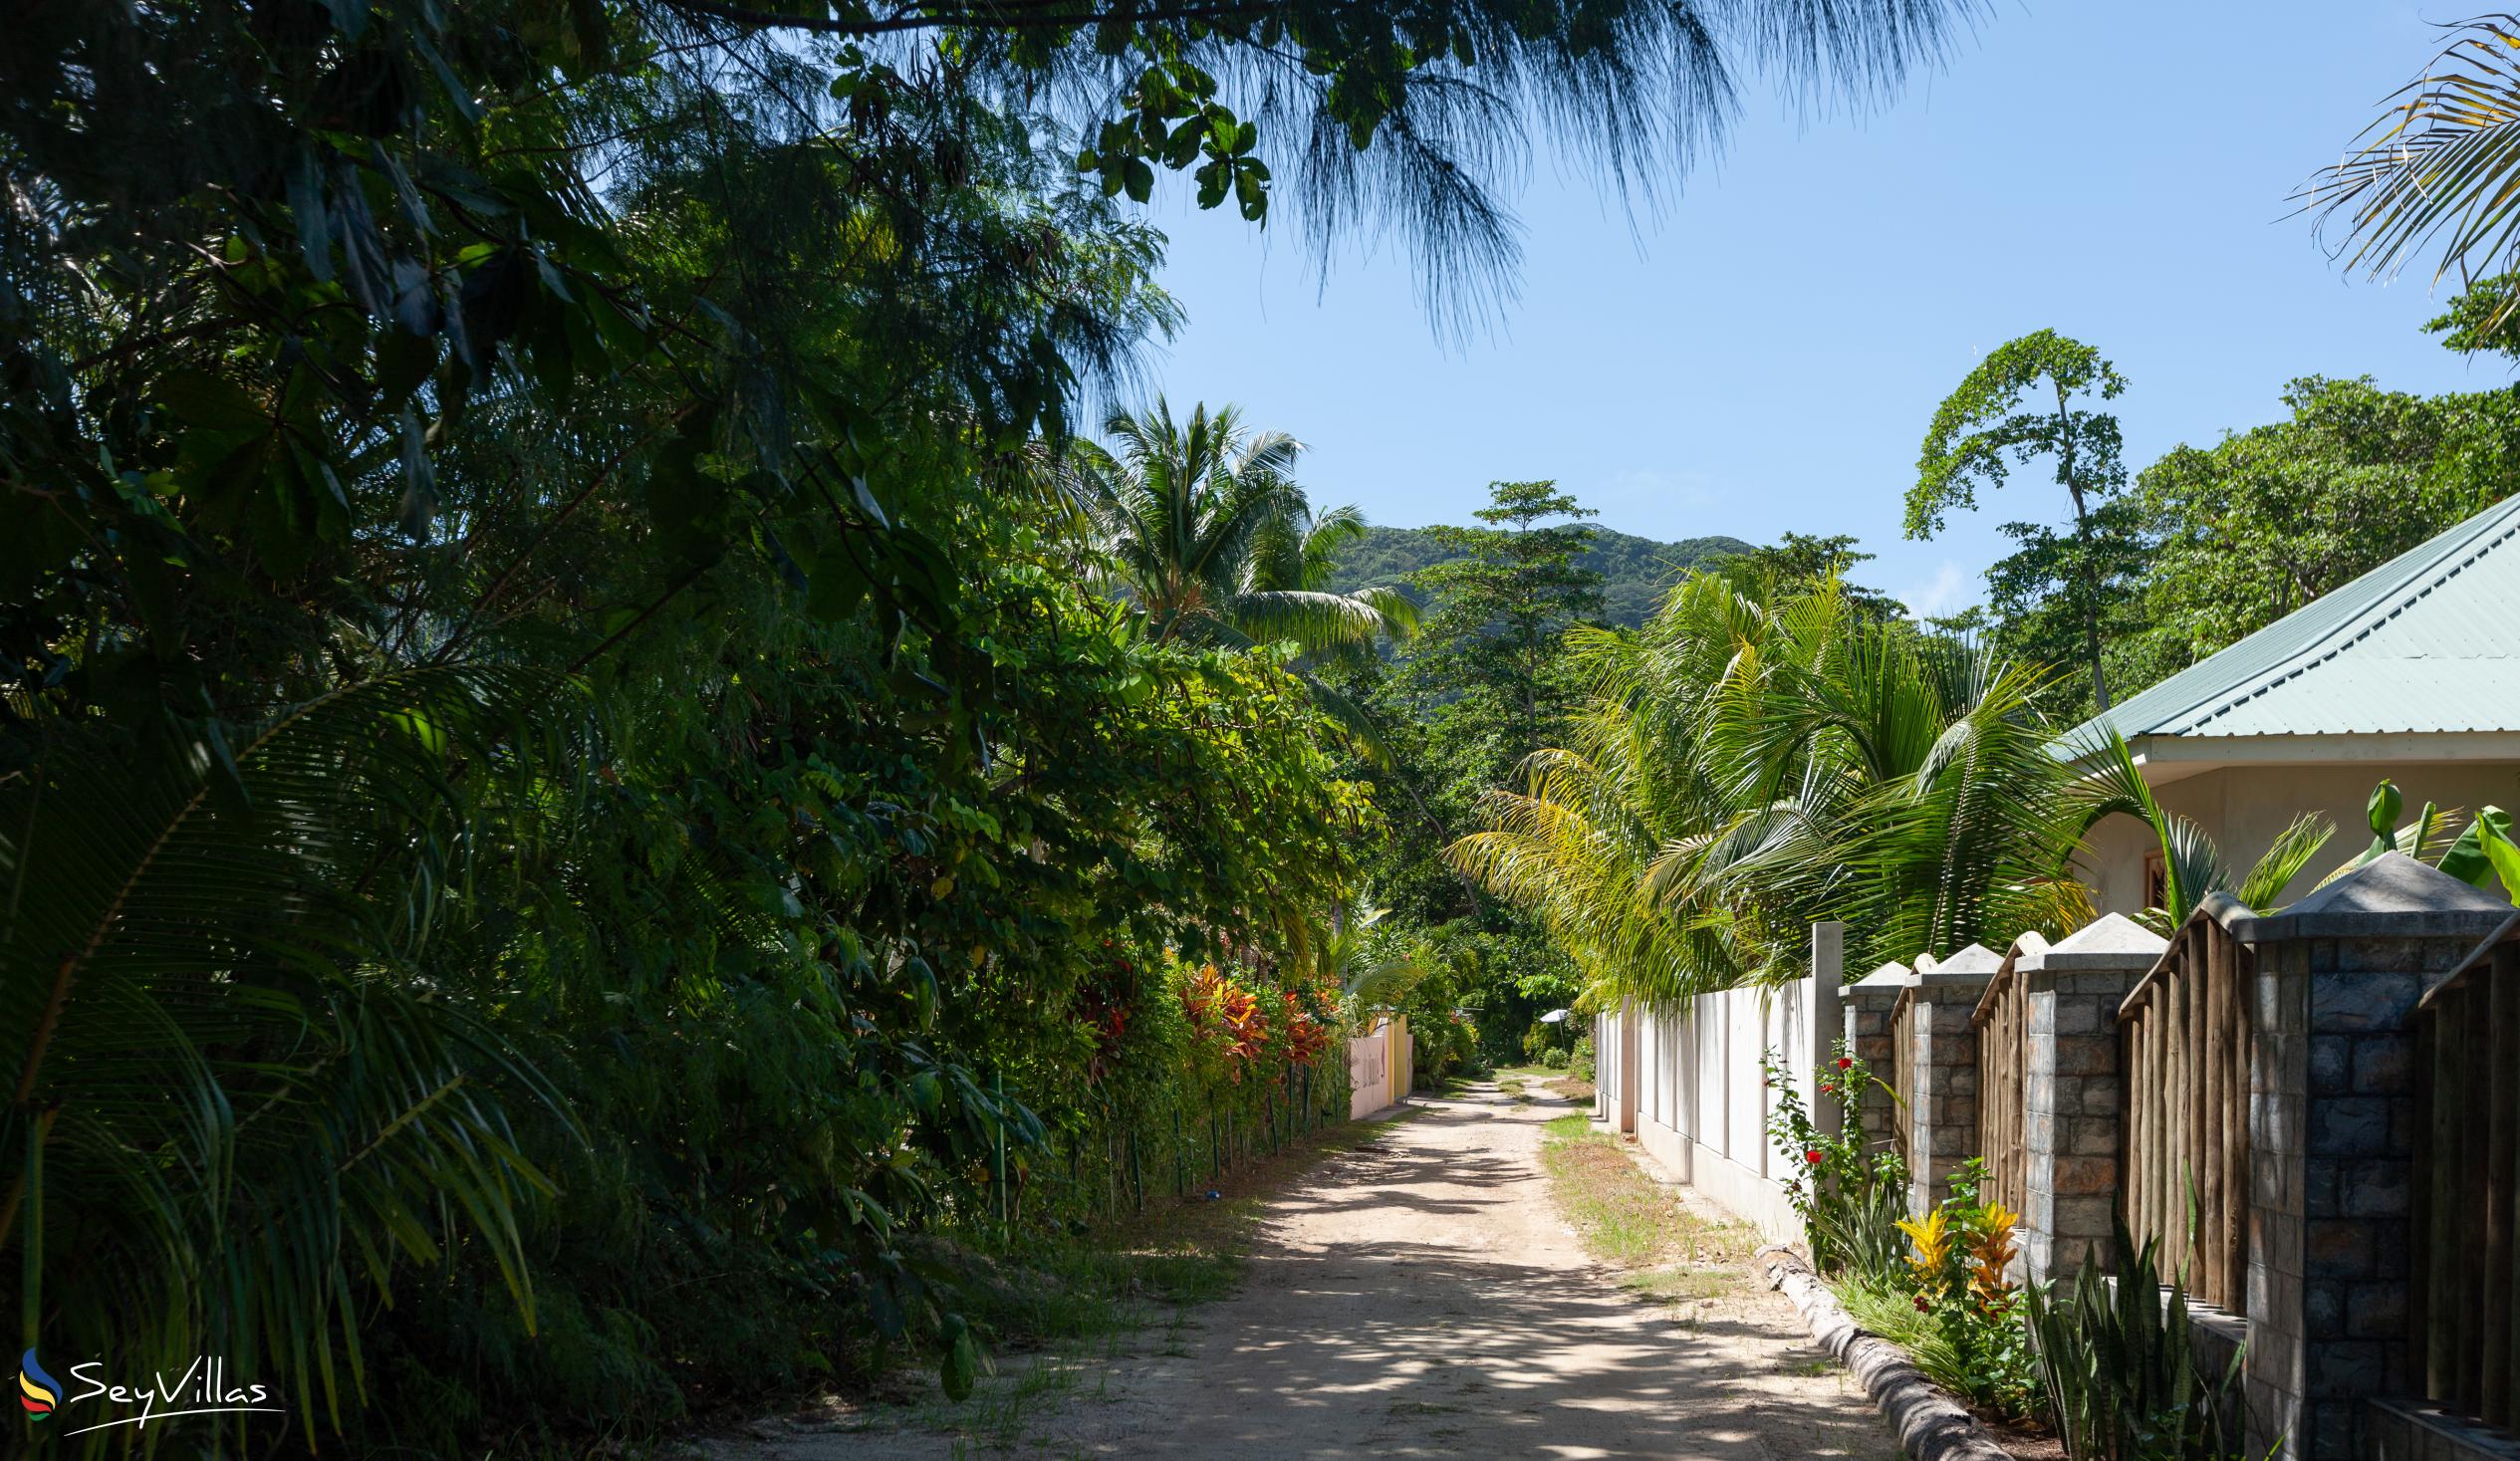 Photo 33: Coco de Mahi - Location - La Digue (Seychelles)